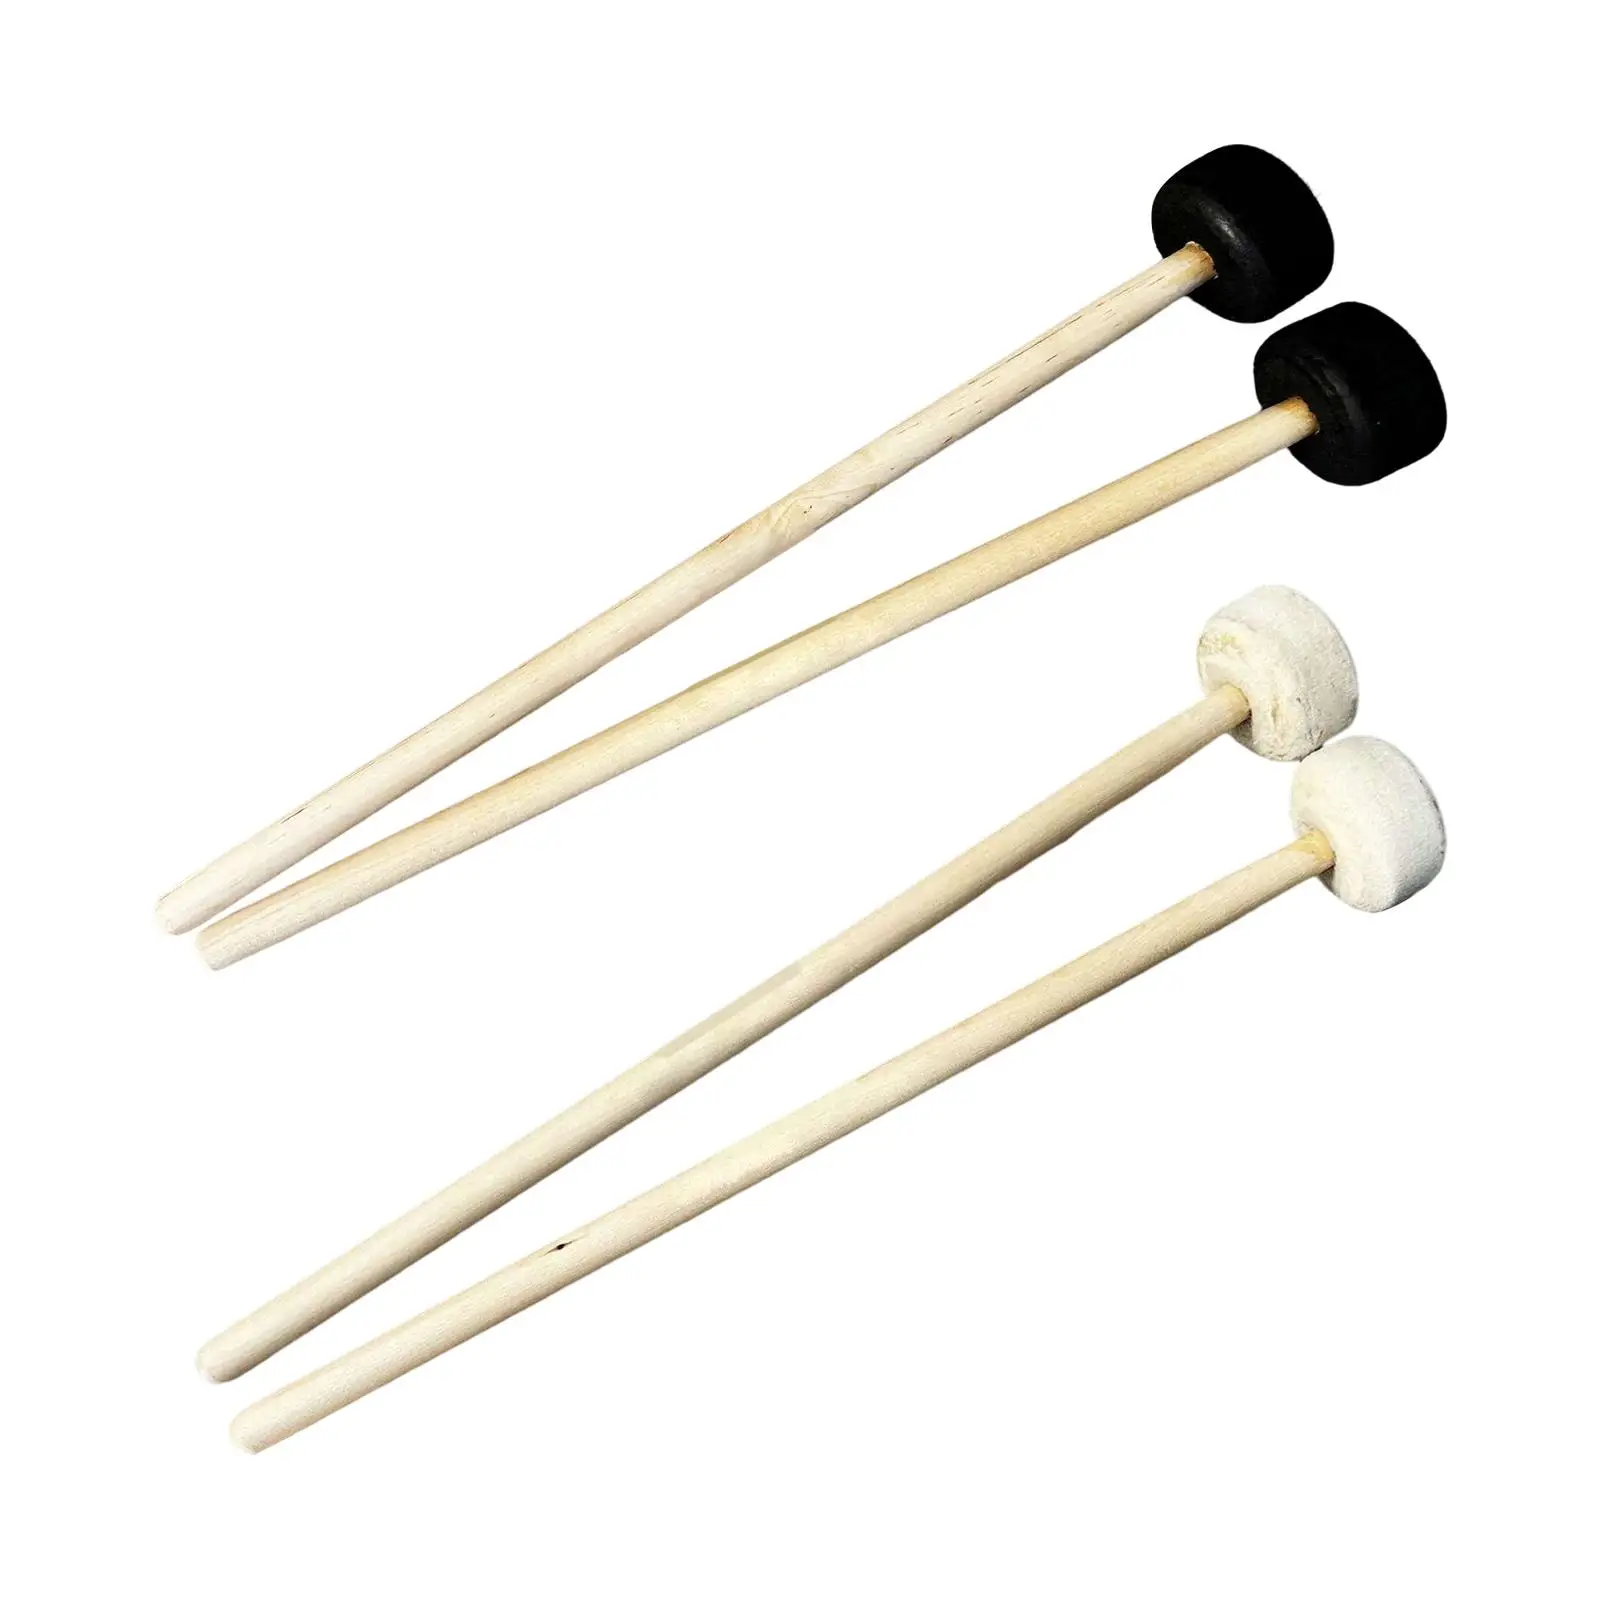 2x Drumsticks Multipurpose Percussion Accessories Wear Resistant Felt Head for